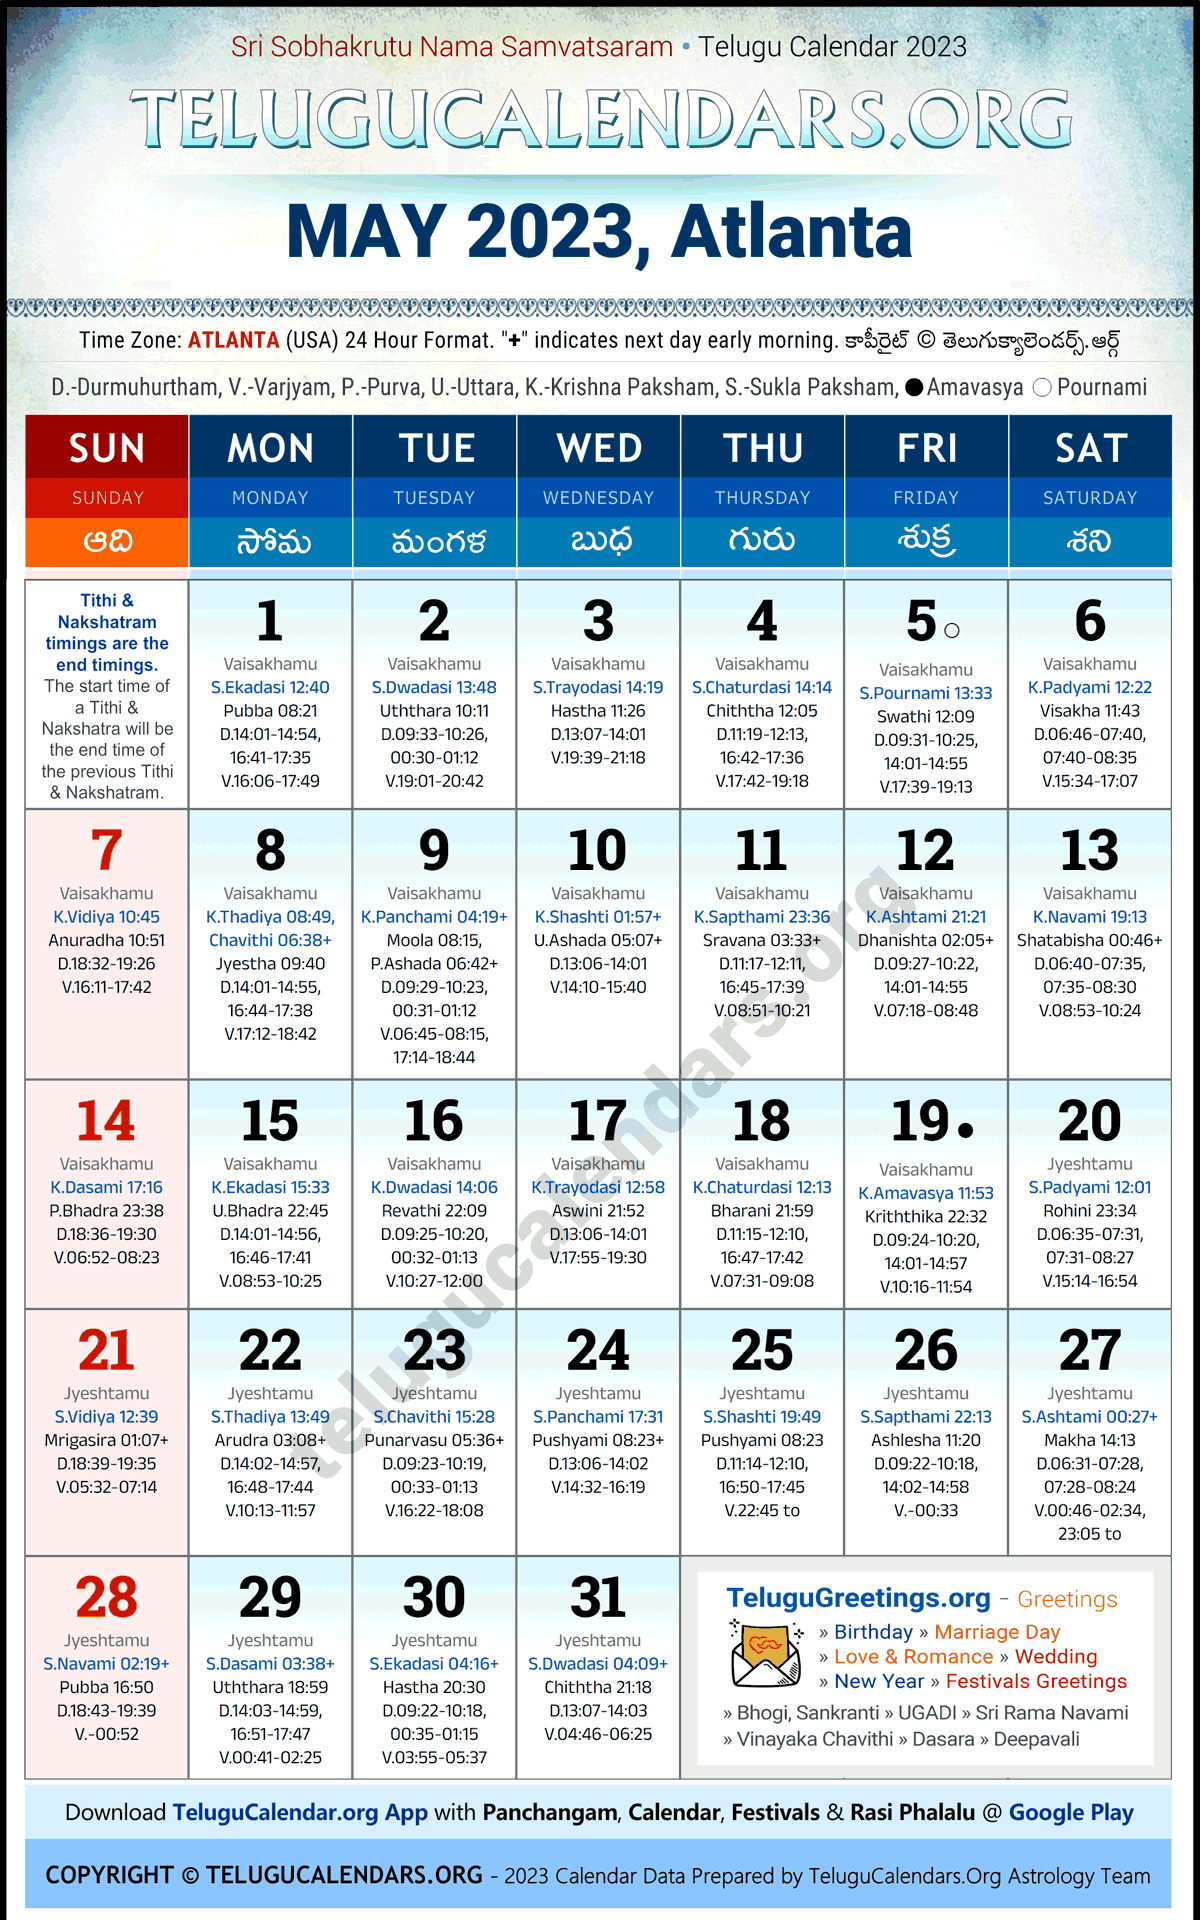 Telugu Calendar 2023 May Festivals for Atlanta